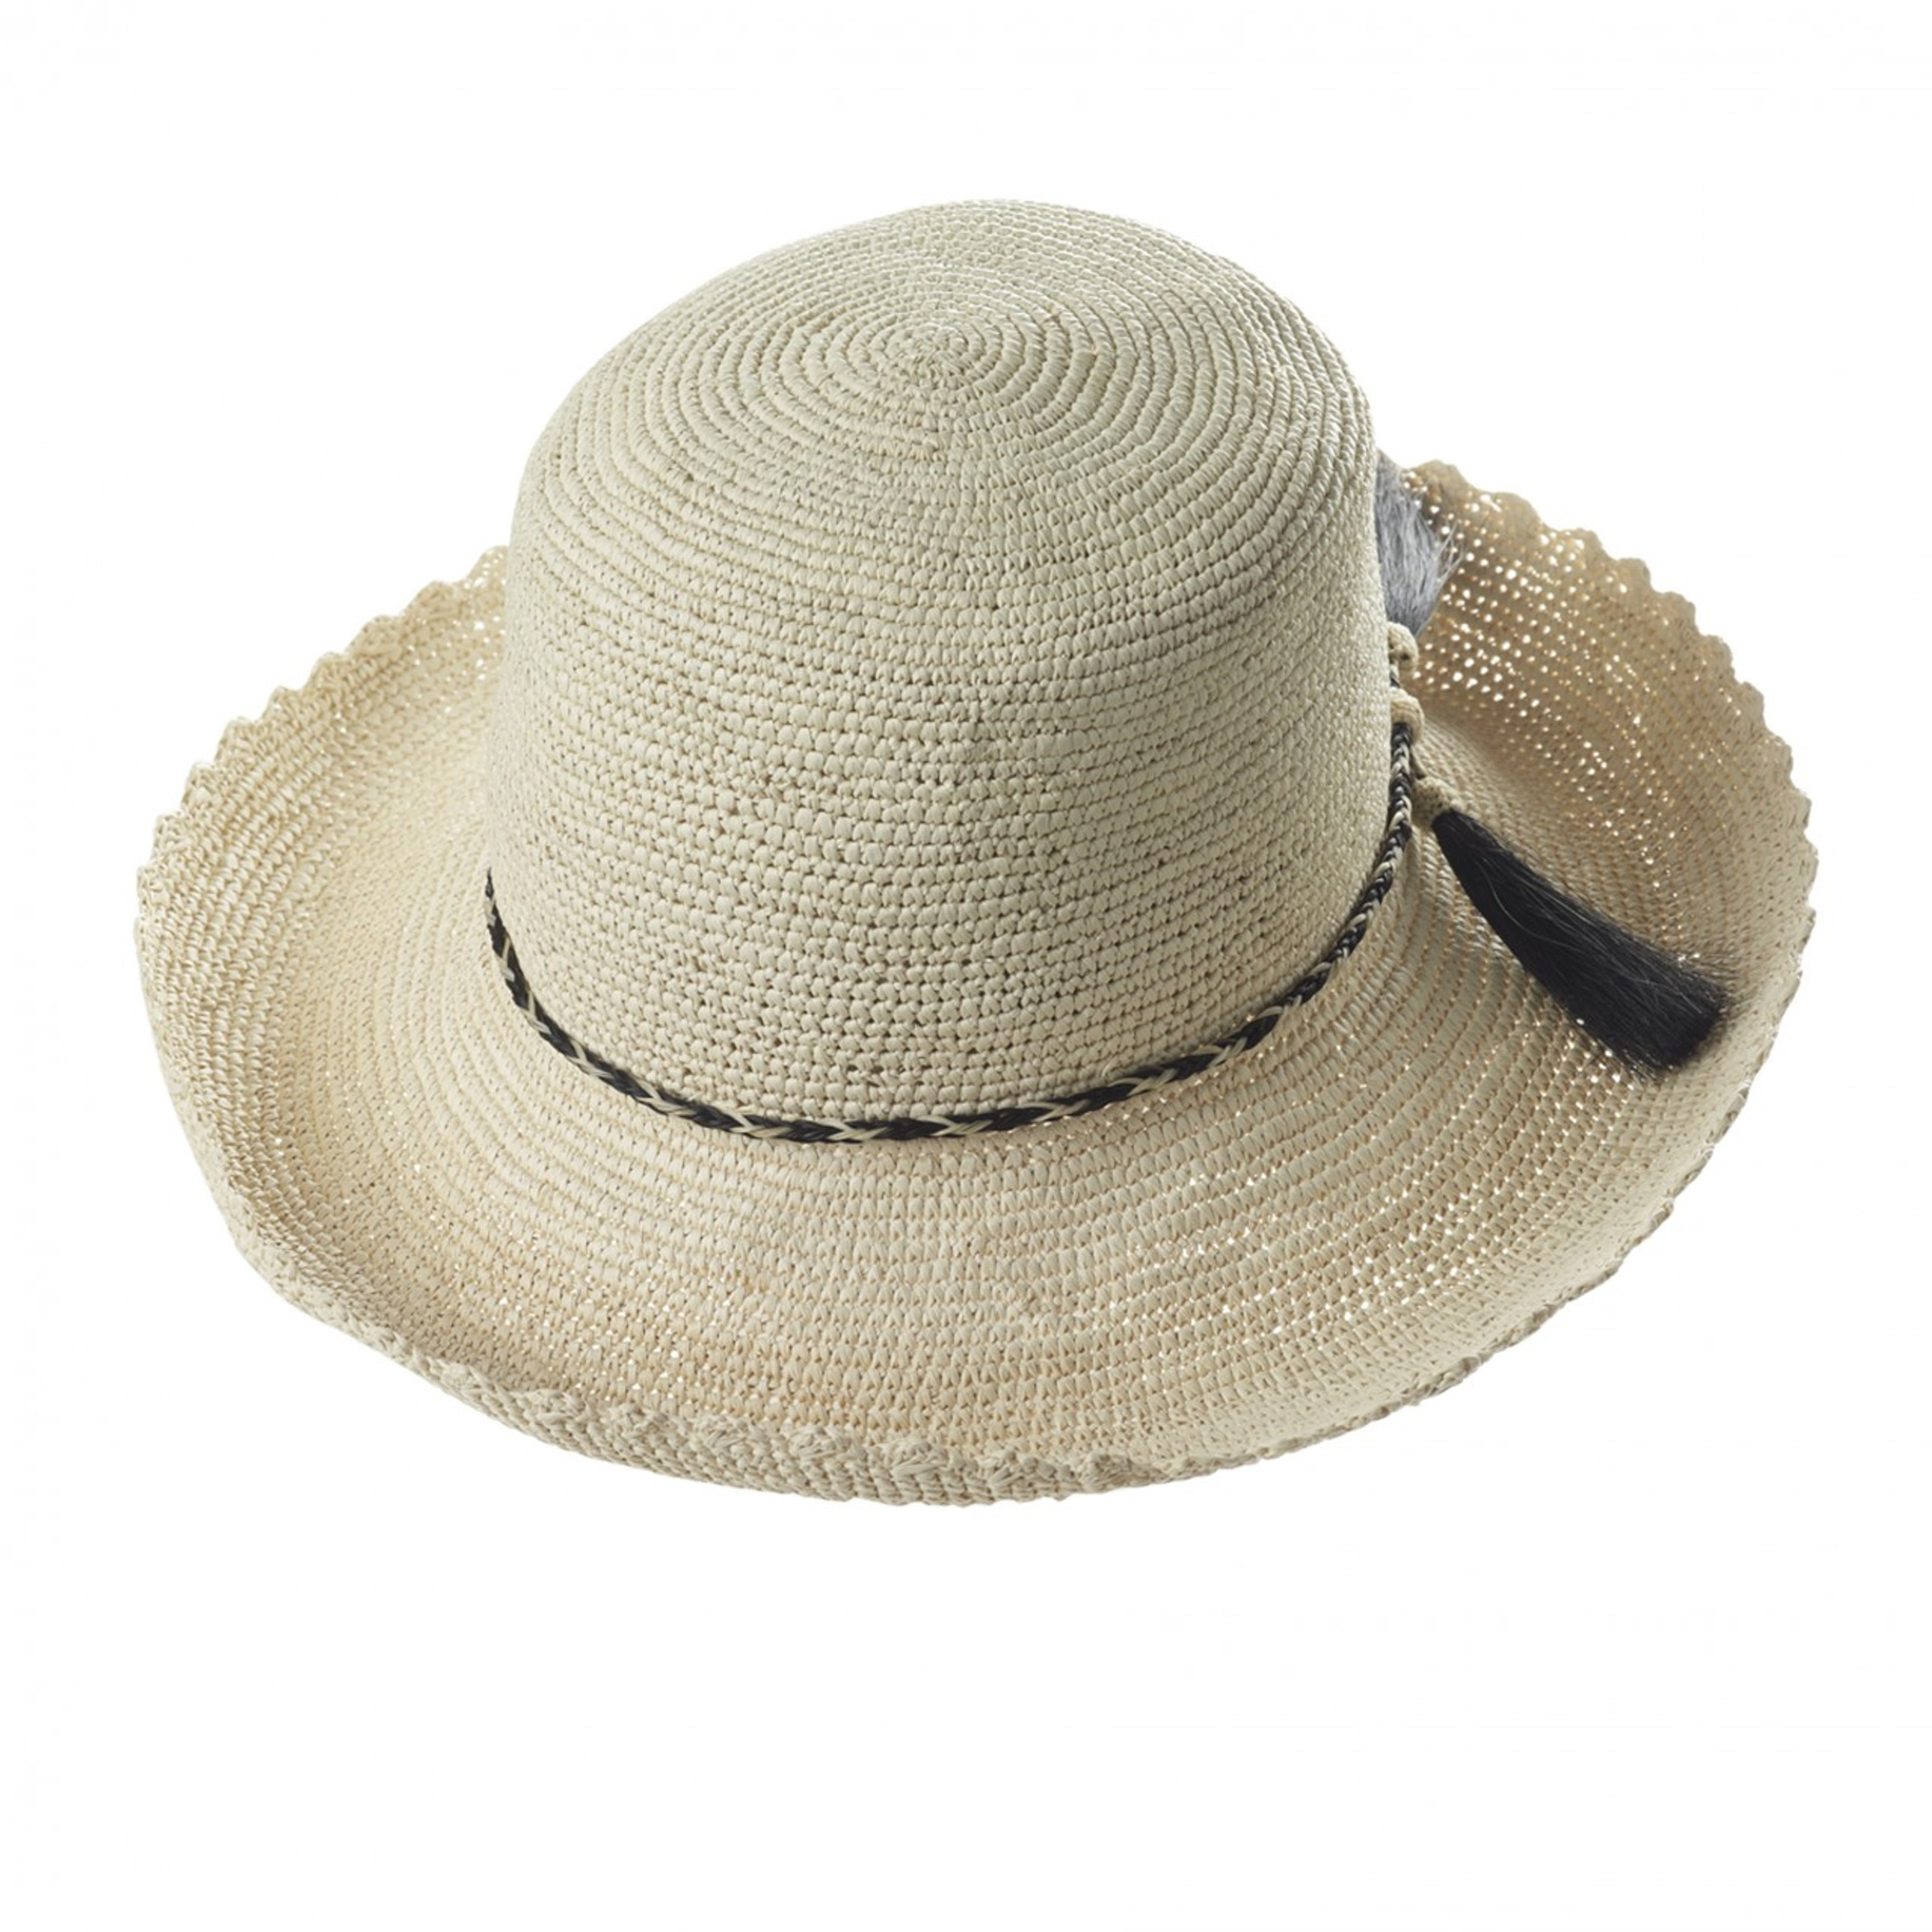 Rosita Crochet Panama - The Panama Hat Company